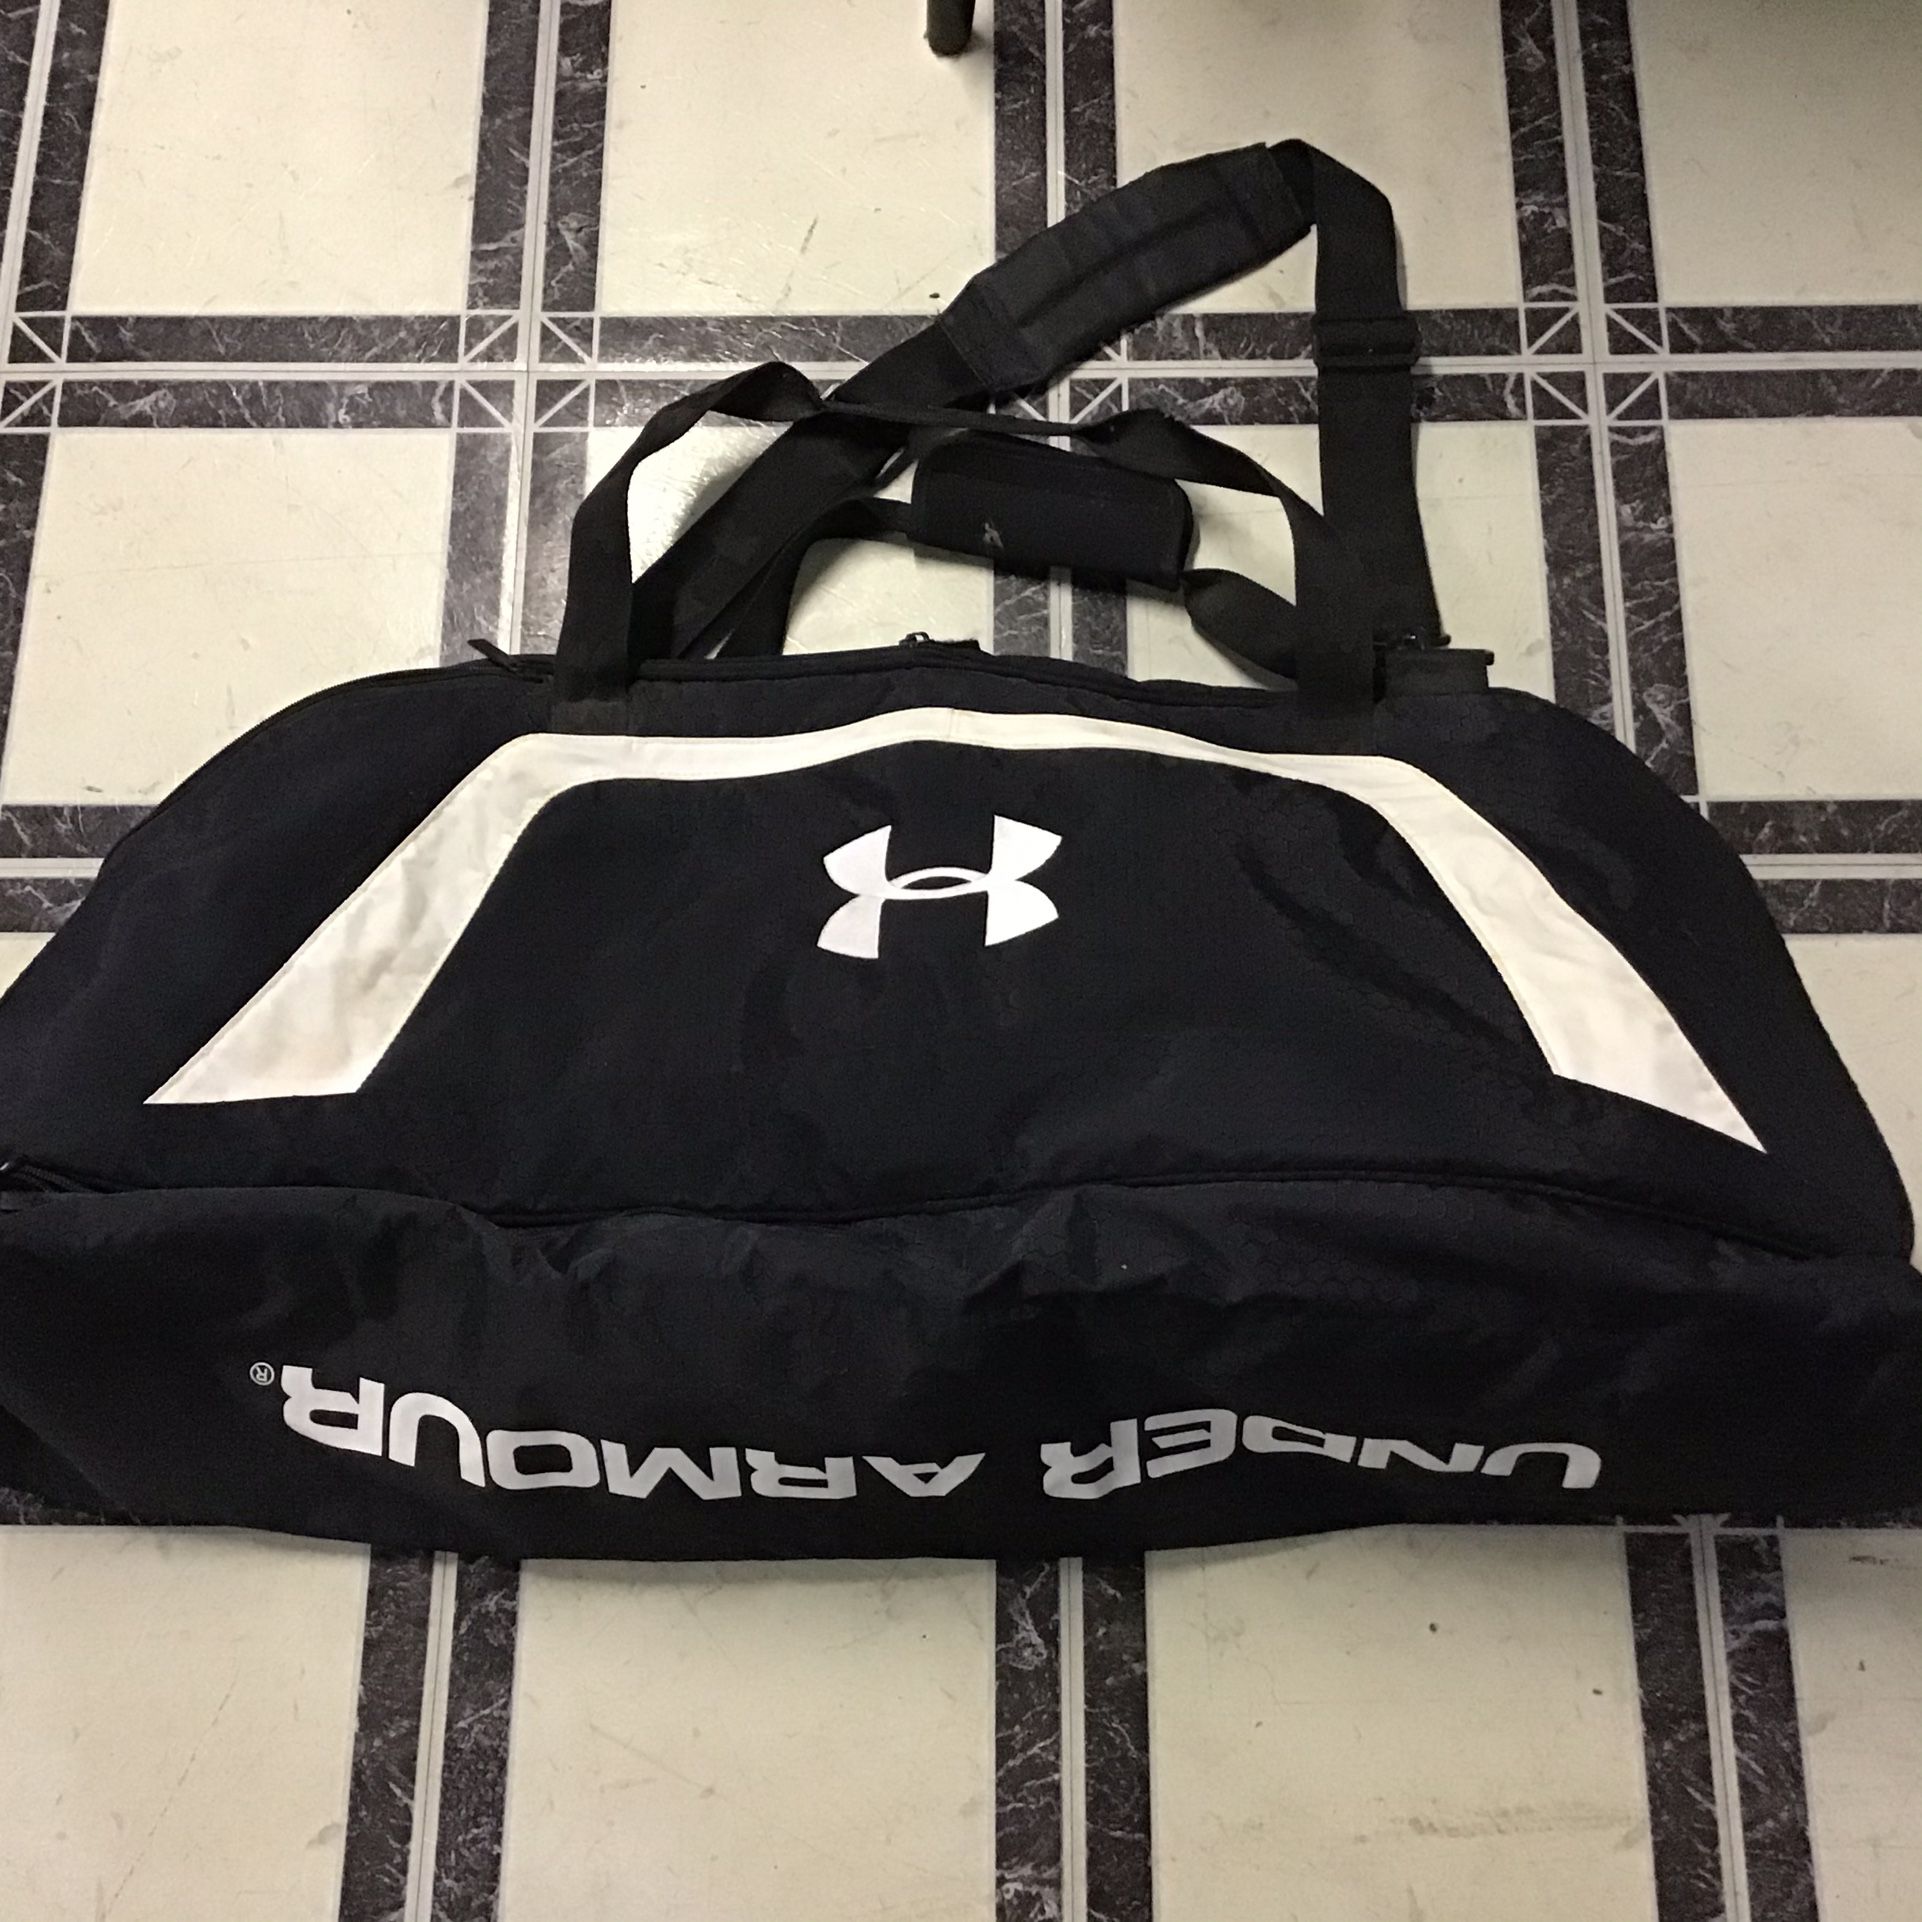 Under Armour~Bat bag for Baseball/softball 35” Bat Equipment storage game gear bag/duffle